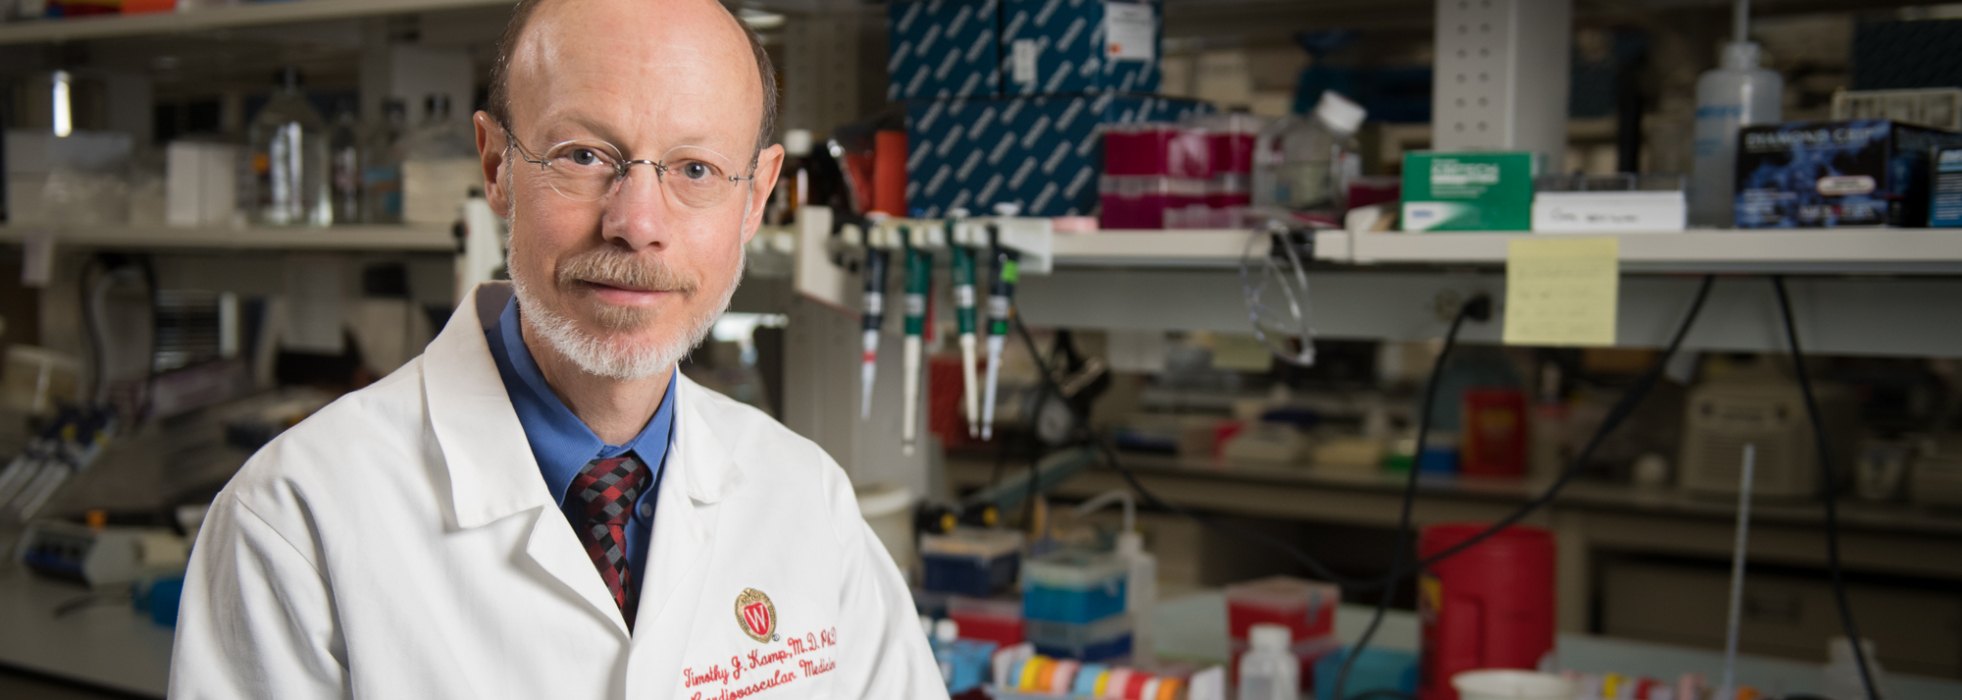 photo of Dr. Tim Kamp wearing white coat in his lab